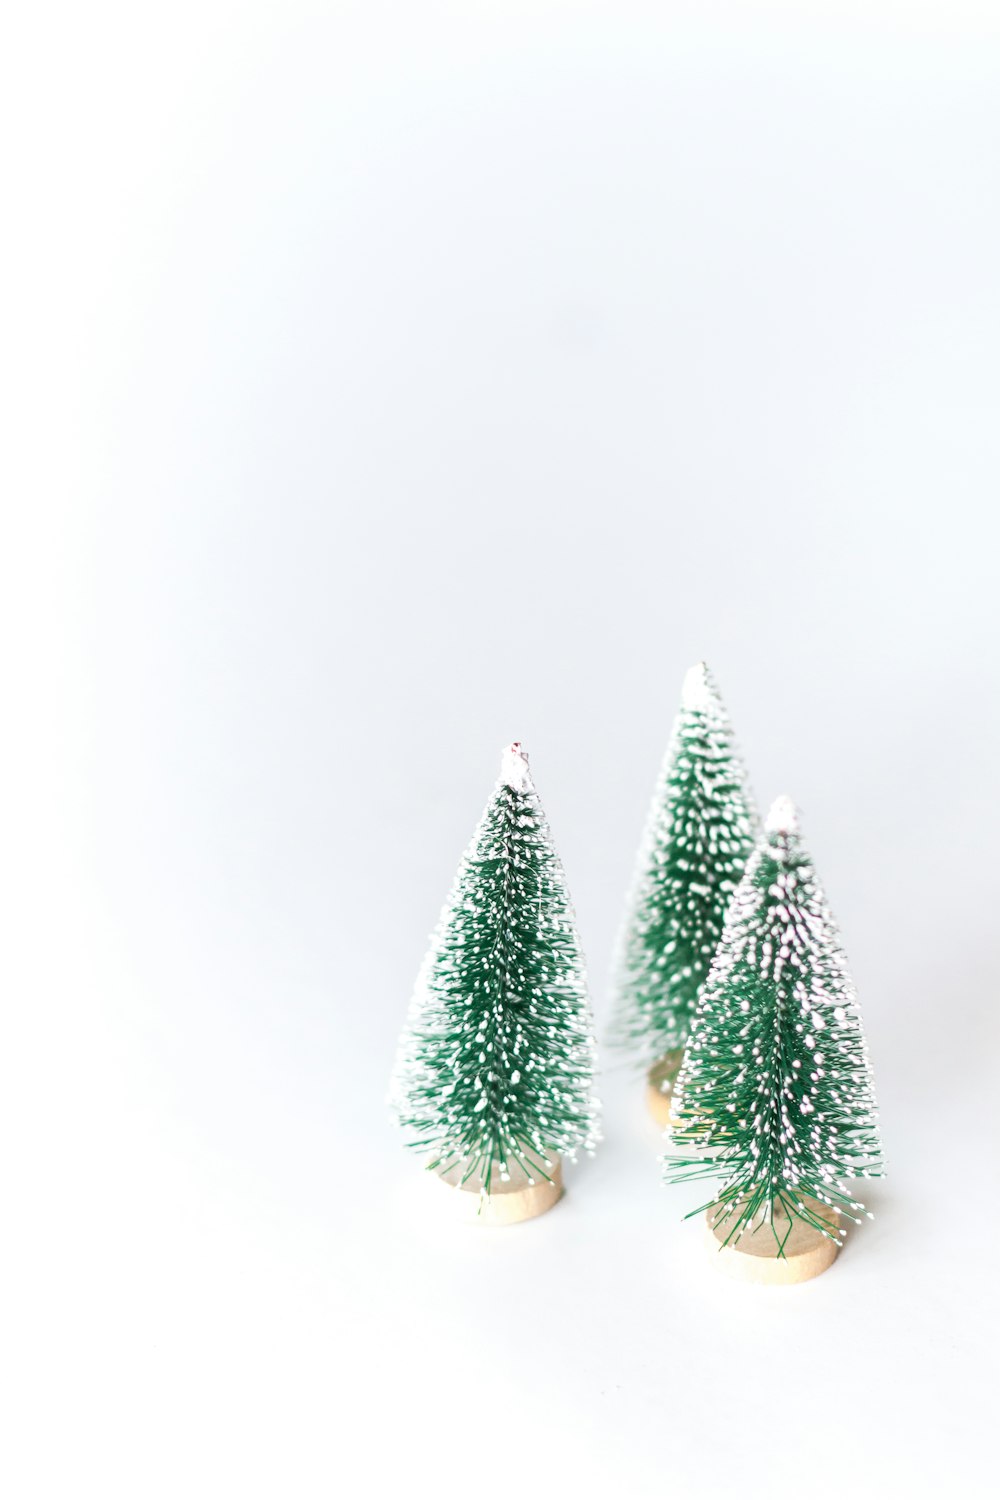 three small green Christmas trees